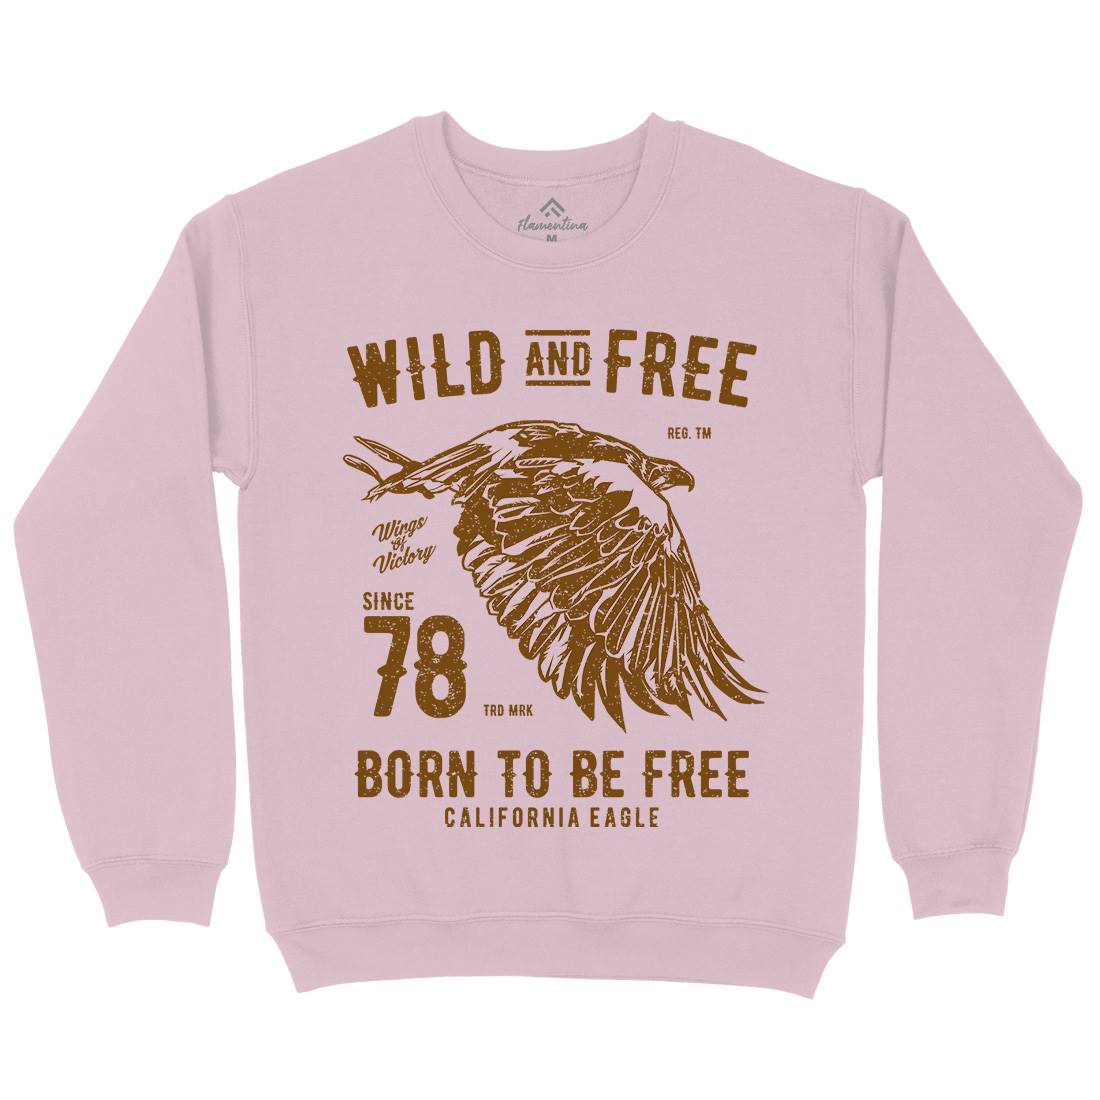 Wild And Free Kids Crew Neck Sweatshirt Army A792